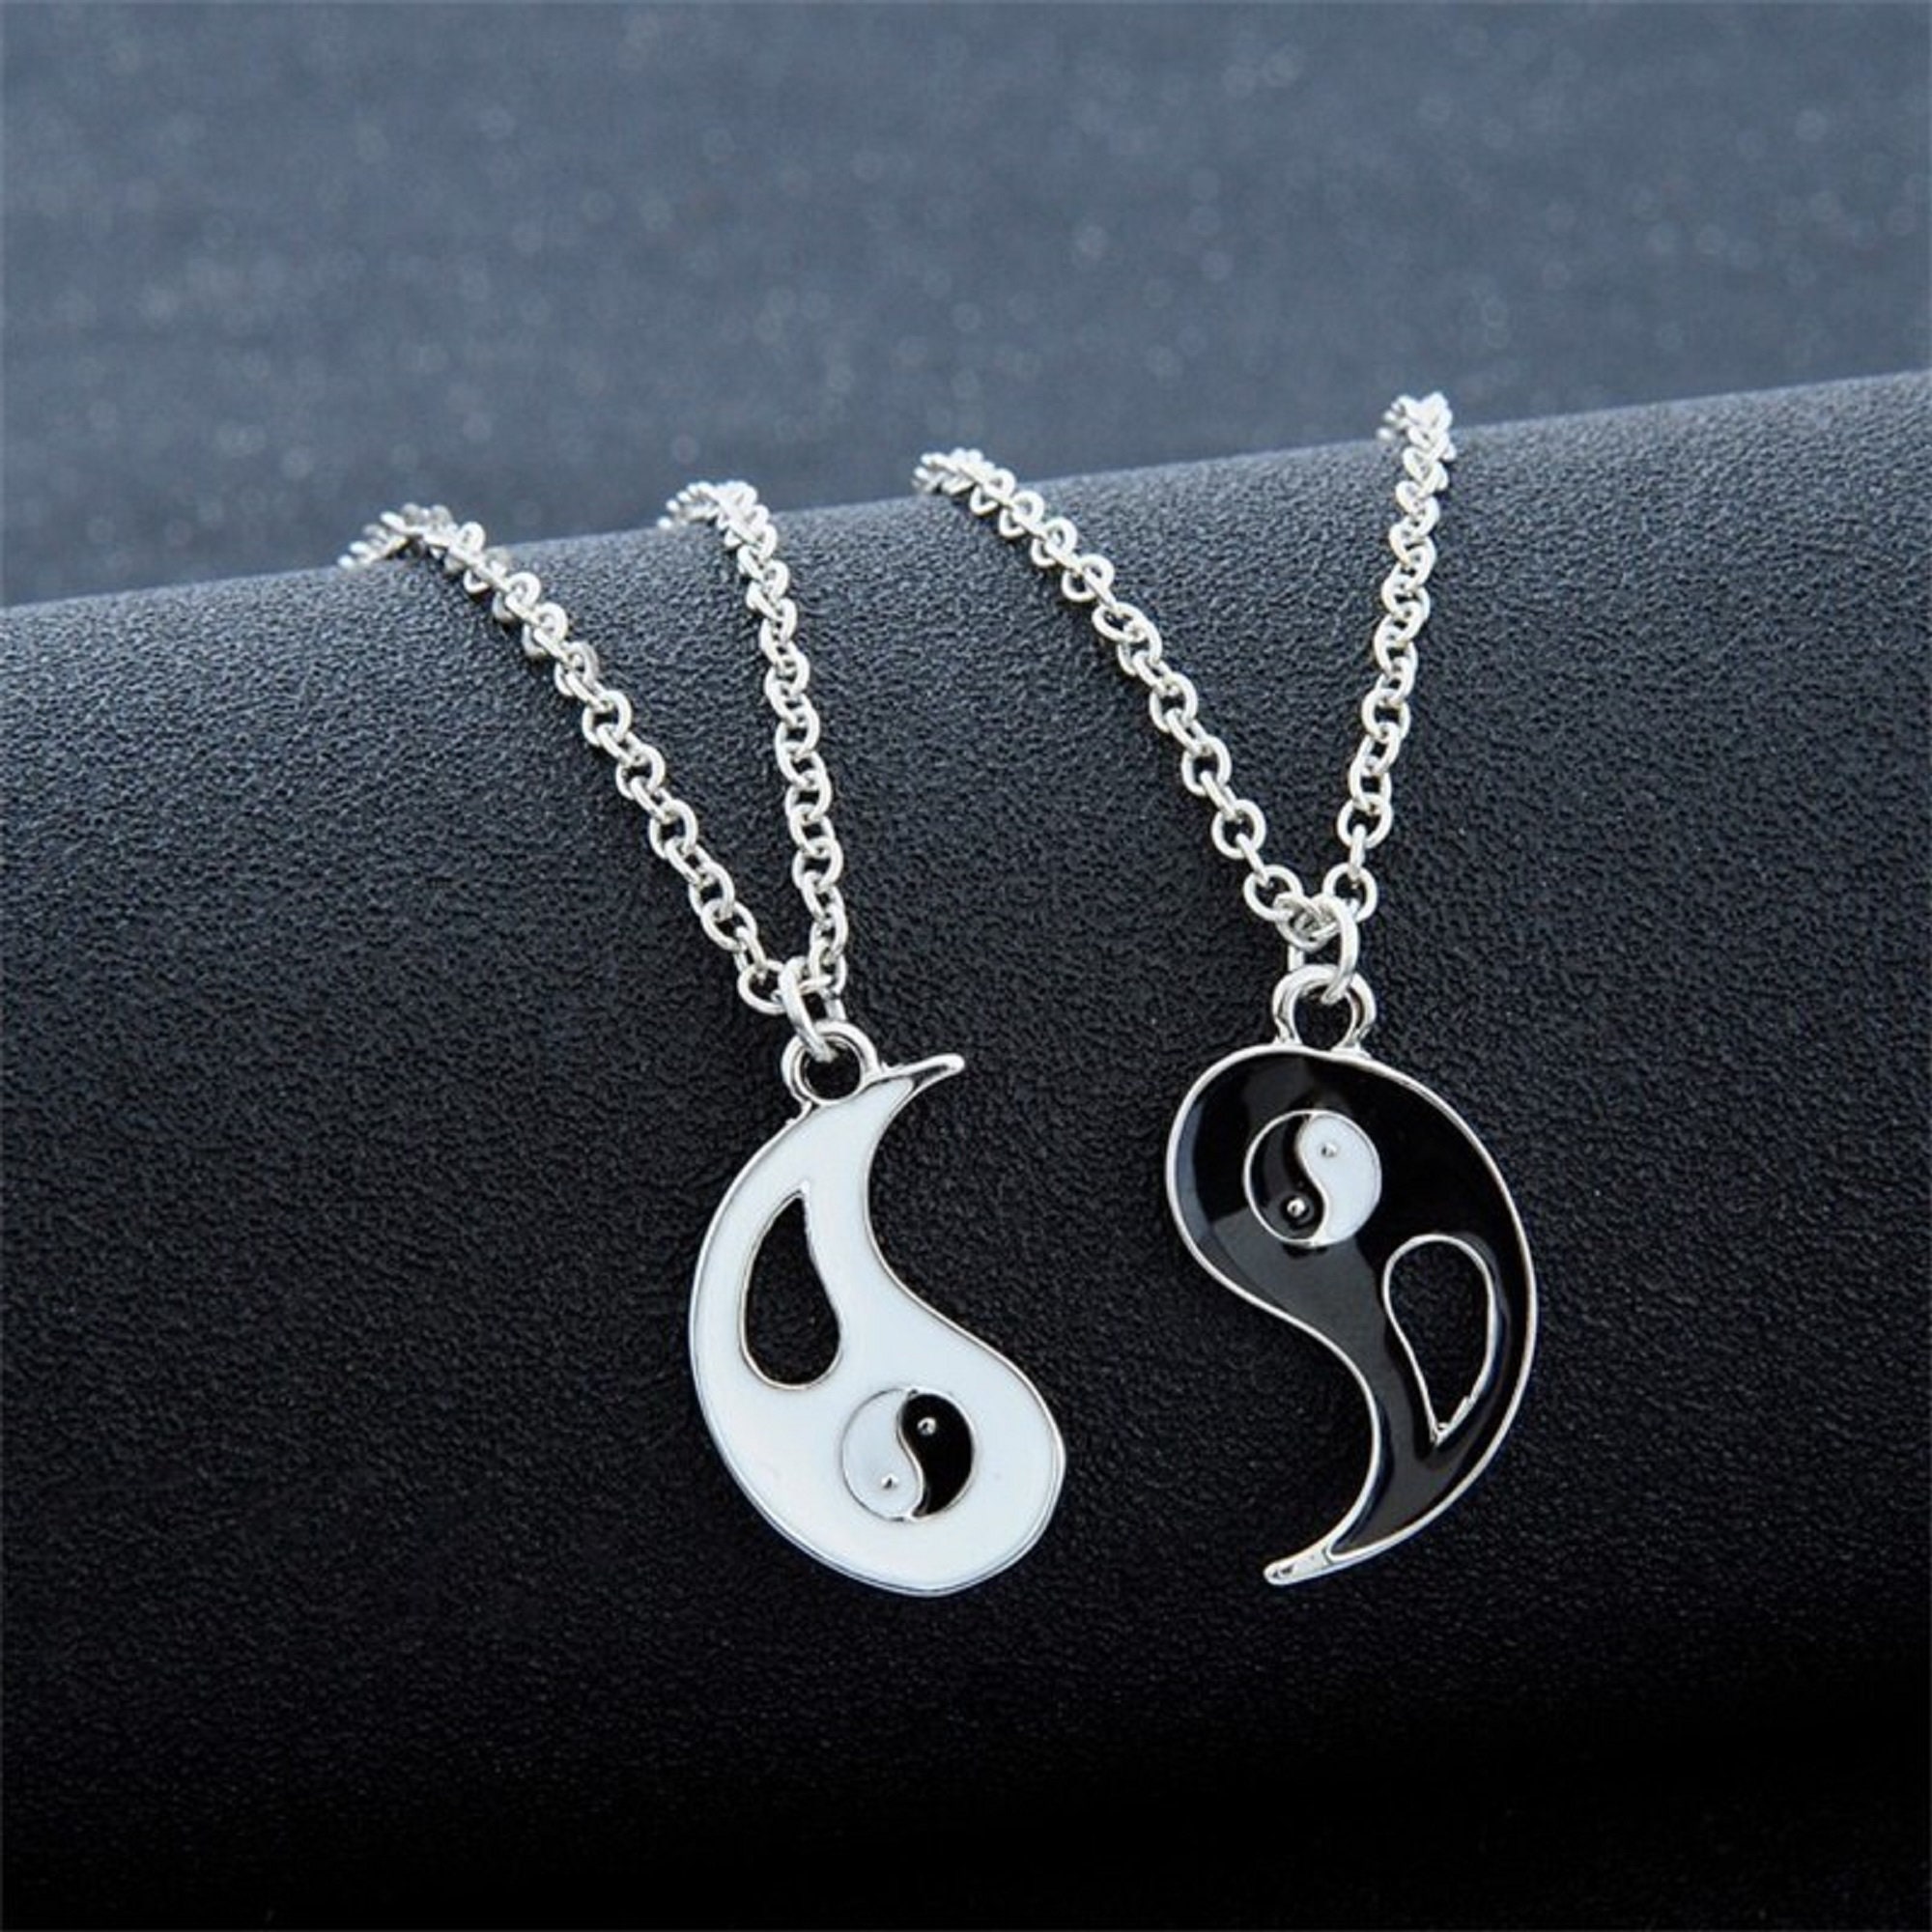 Black And White Yin Yang Bagua Diagram Pendant Necklace Bracelet Family Friends 